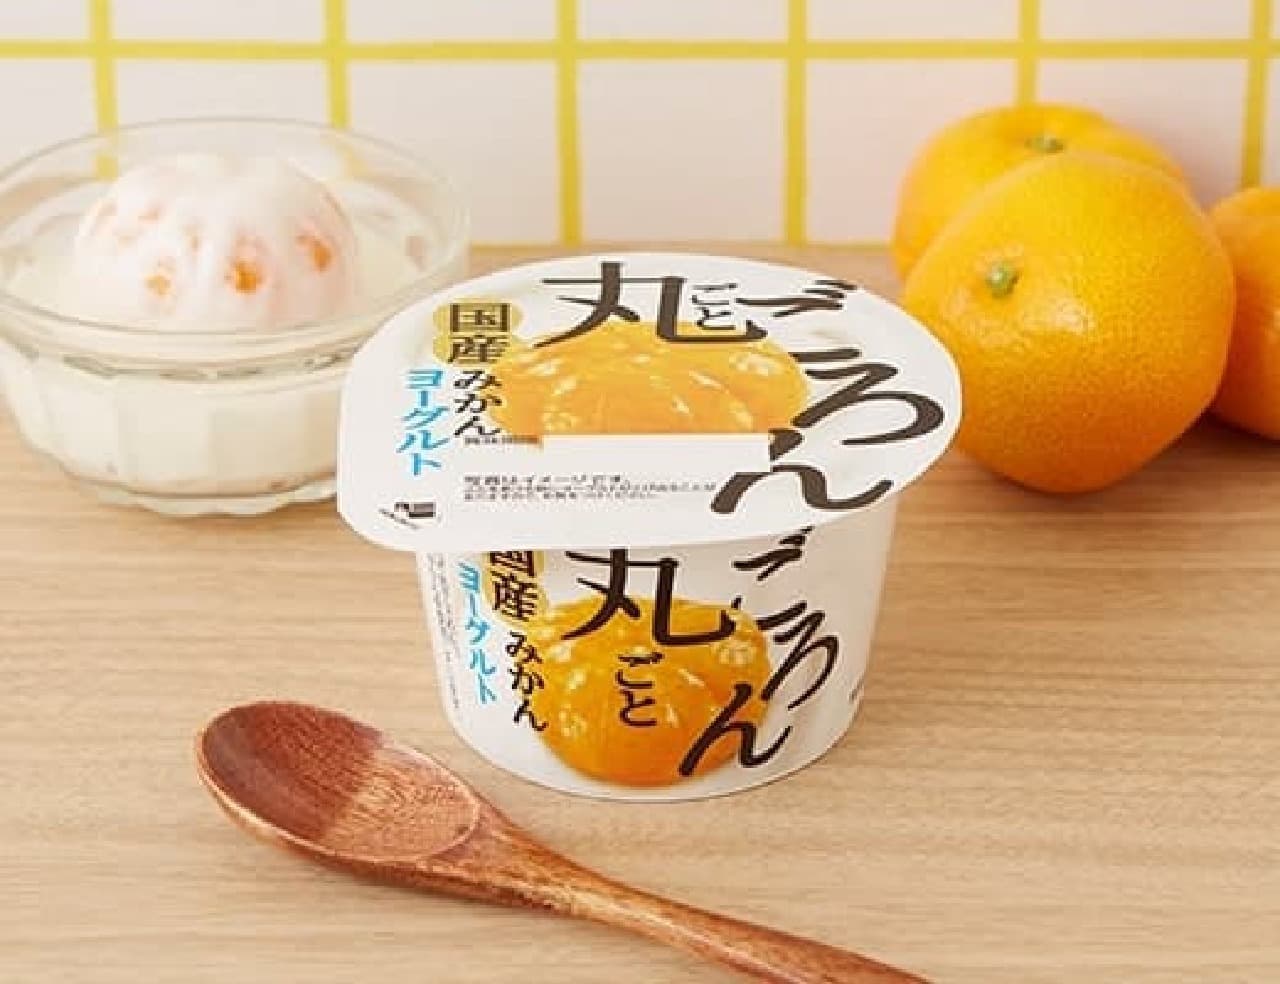 LAWSON "Hokkaido Nyugyo Goron Marugoto Domestically Produced Mandarin Oranges Yogurt 120g".